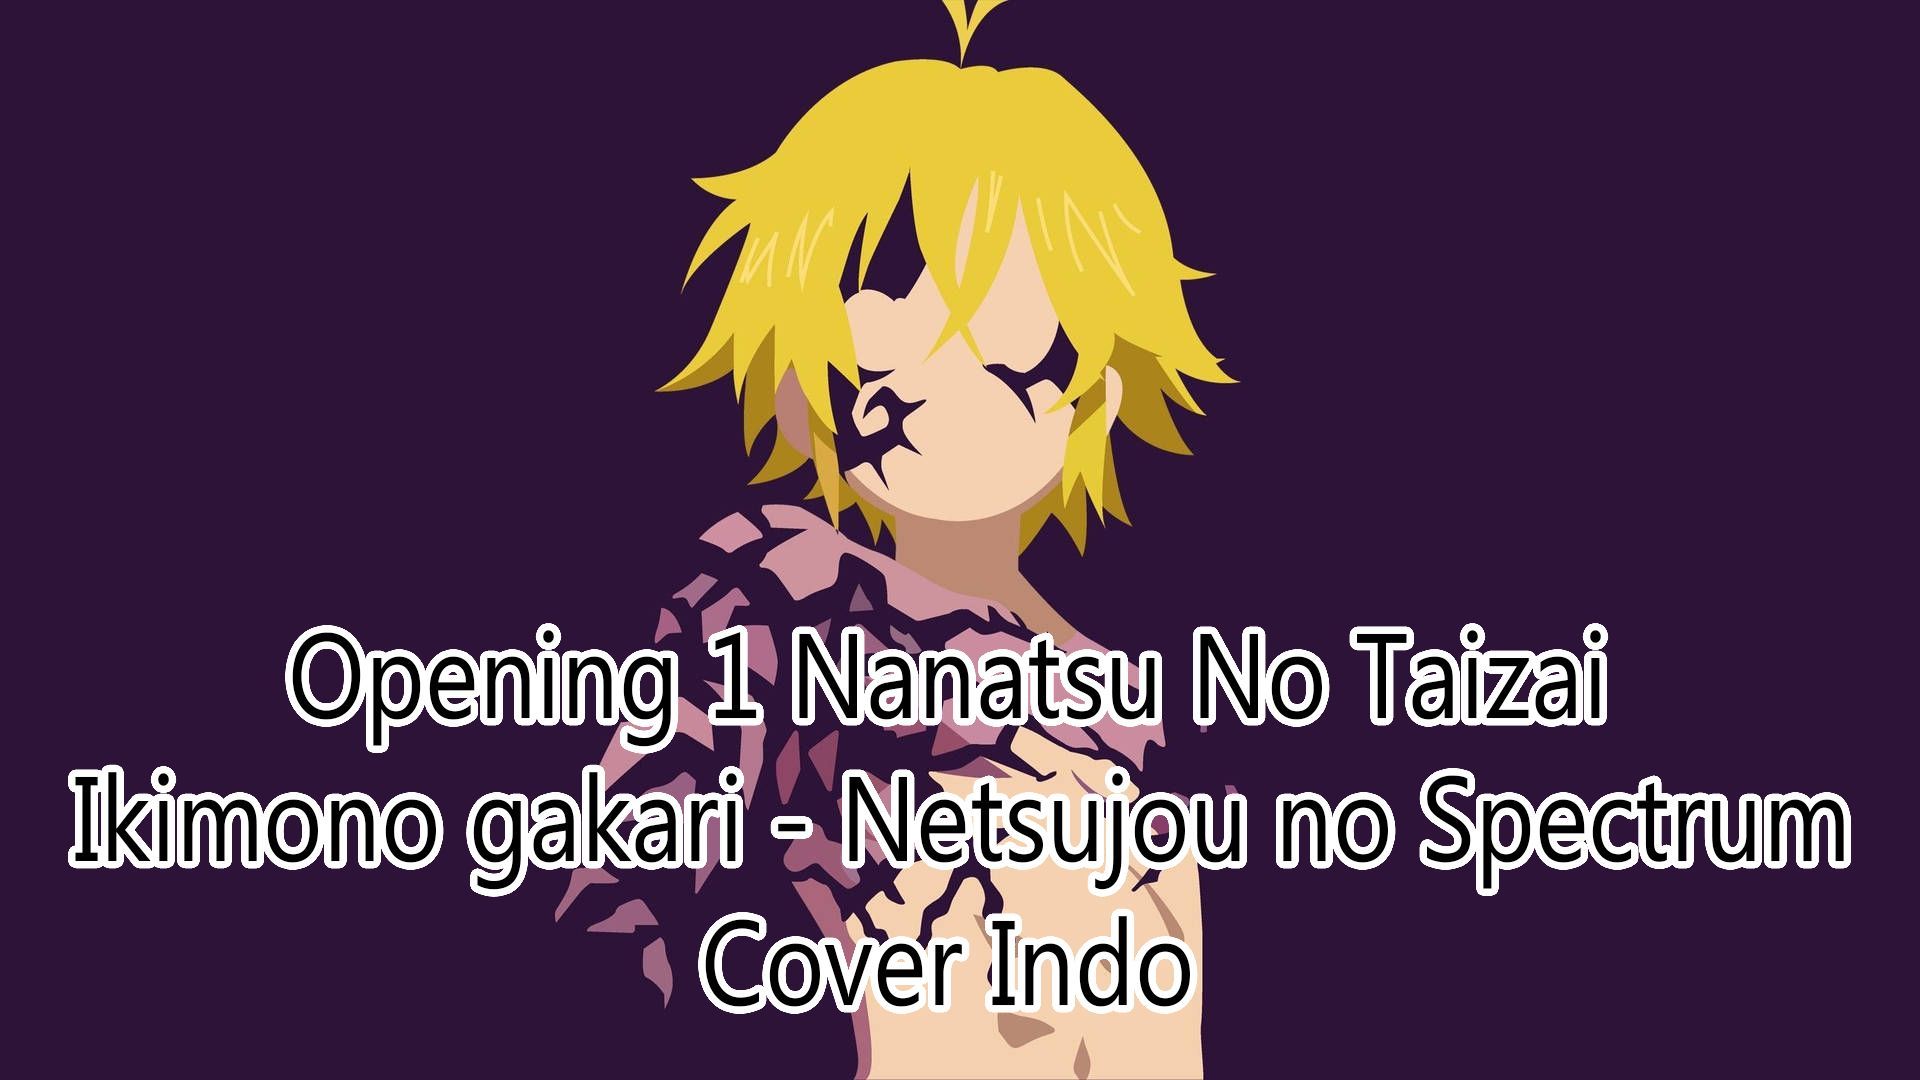 🖤Opening 1 de #nanatsunotaizai 🎶🎧 #netsujounospectrum - #ikimonog